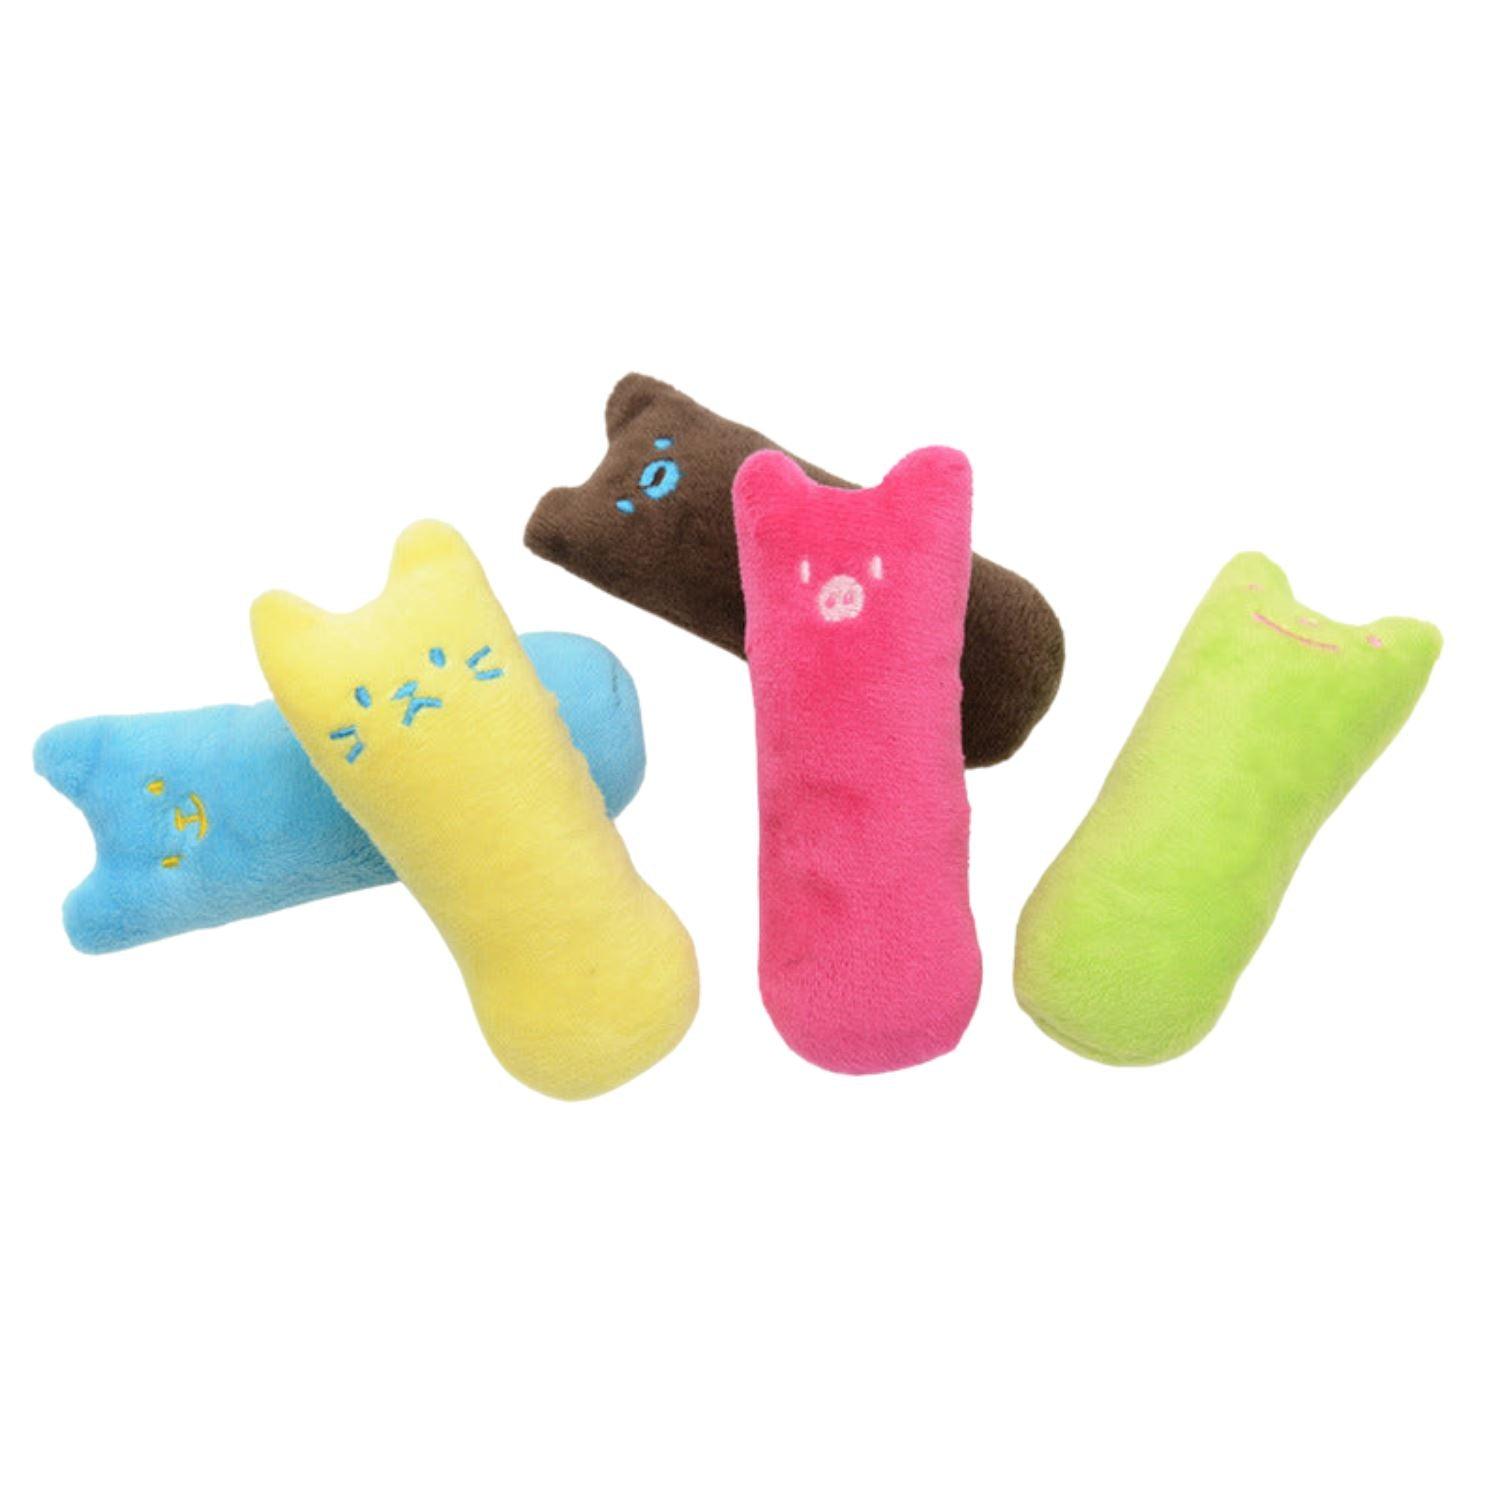 Mini Teeth Grinding Toys Pet Pet Store Gifts 